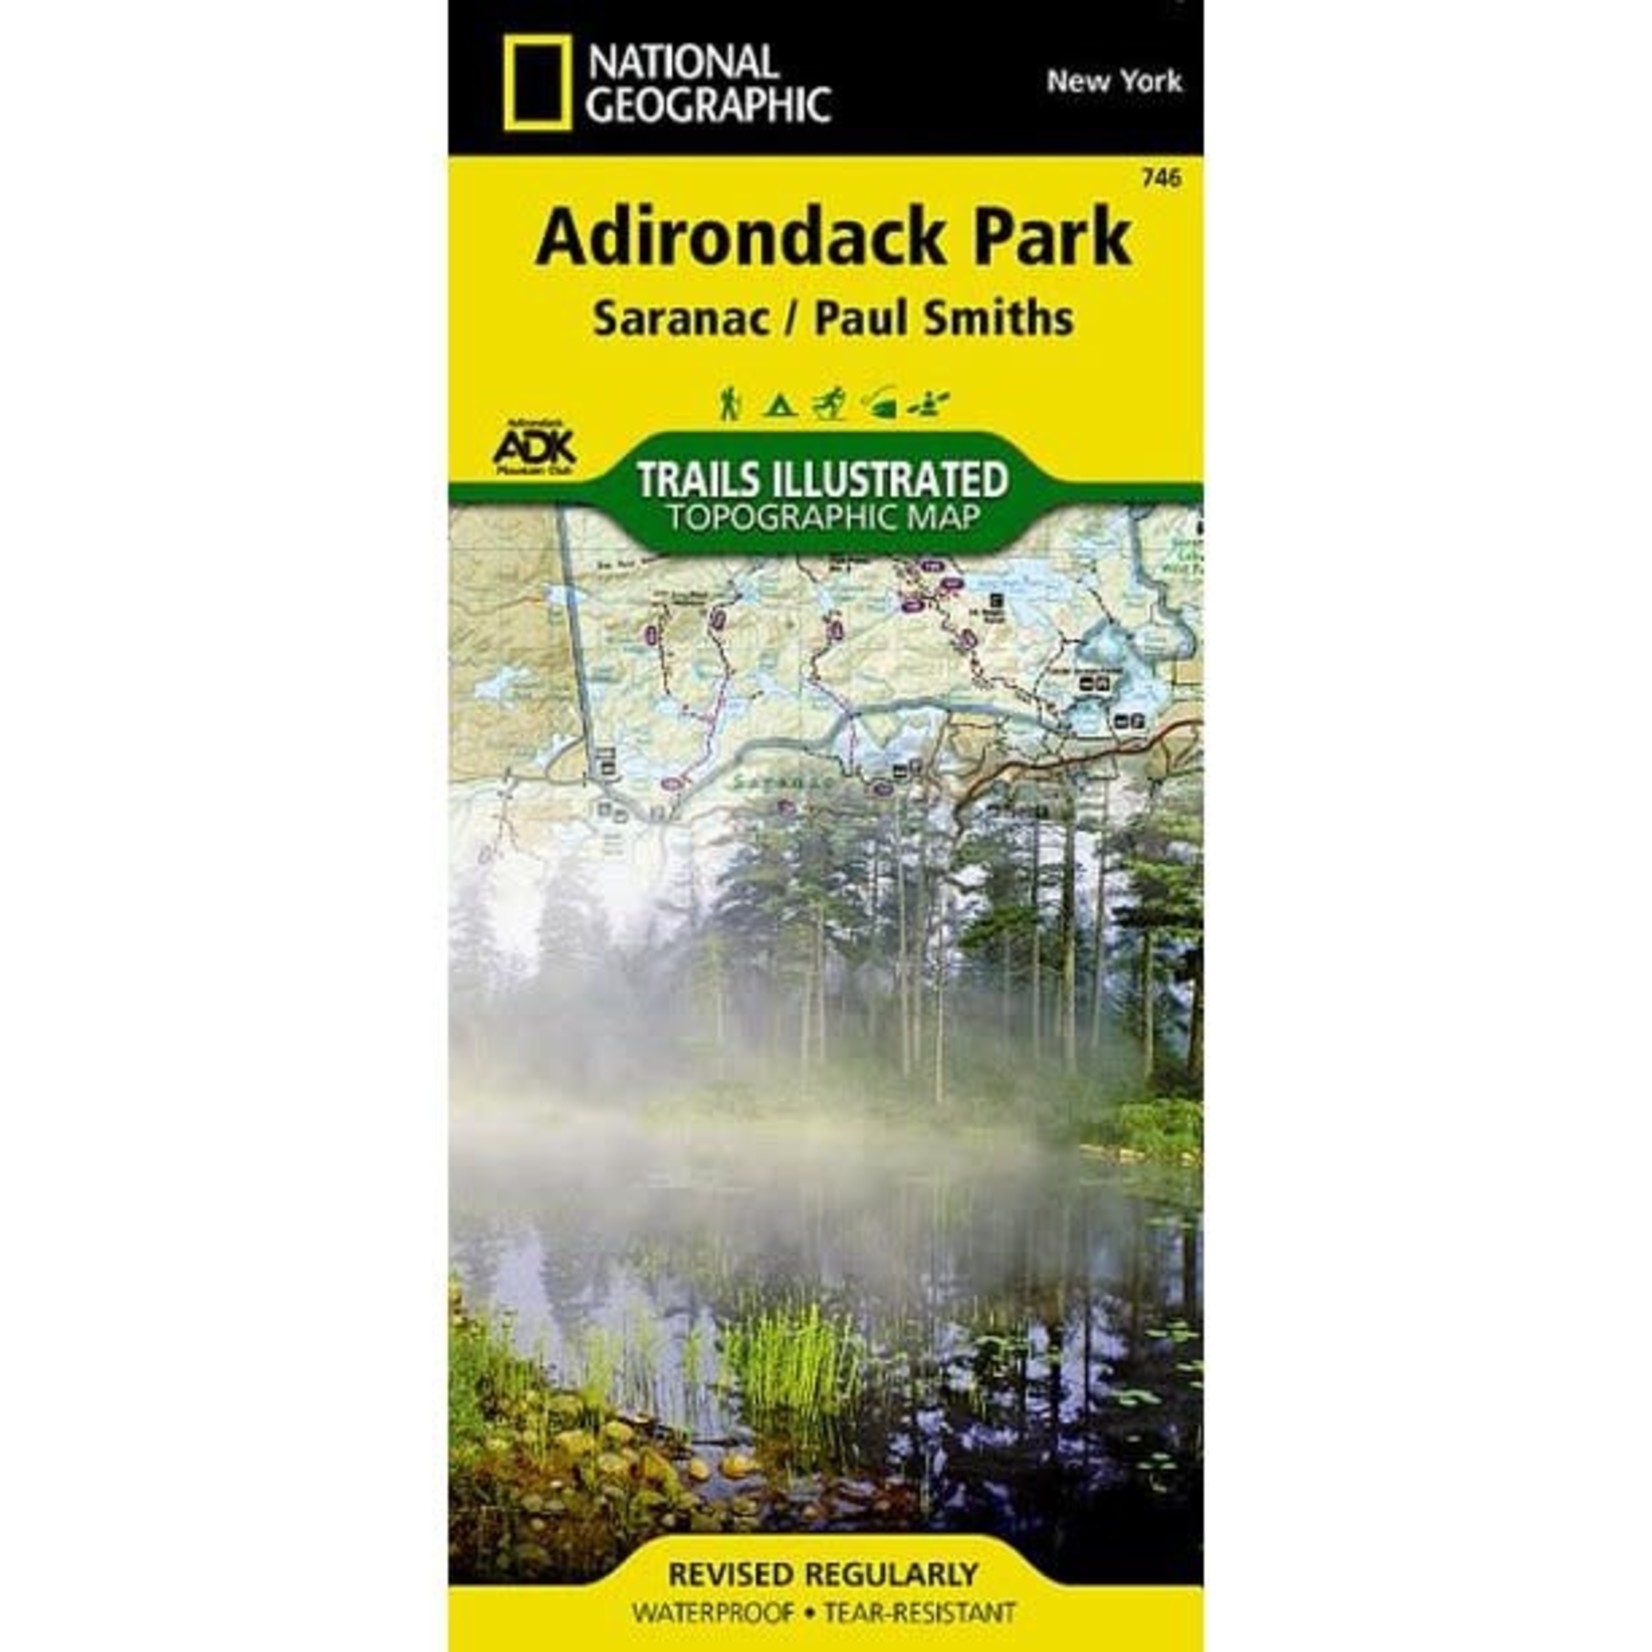 Saranac, Paul Smiths: Adirondack Park